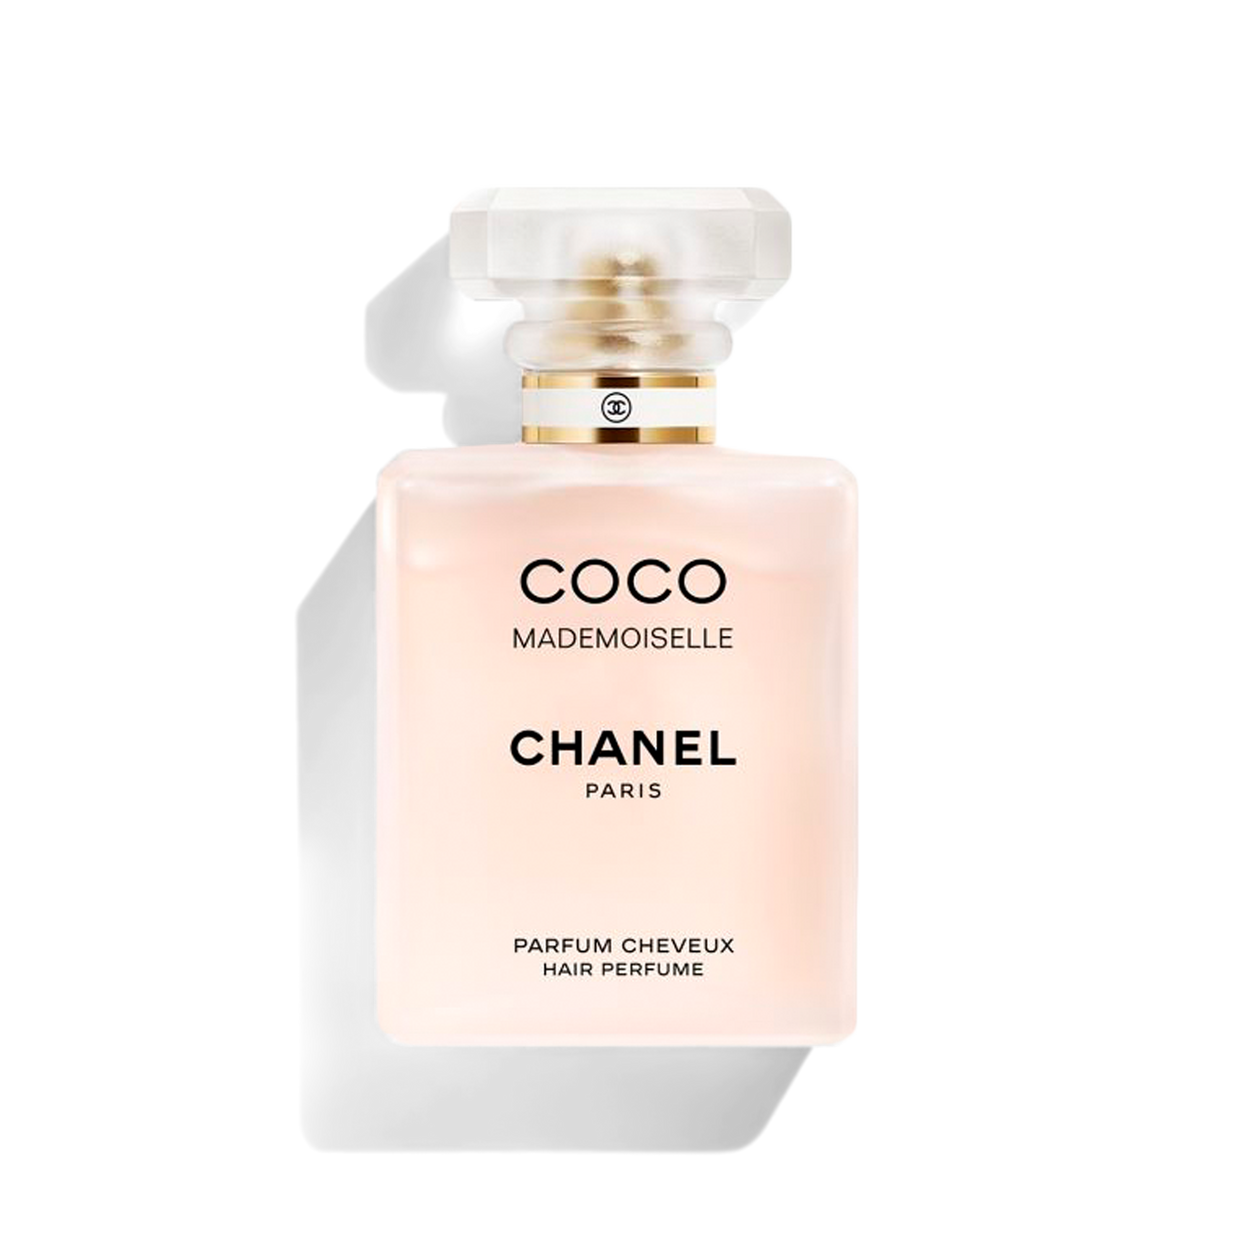 Chanel Bleu De Chanel EDT Travel Spray & Two Refills 3x20ml Men's Perfume